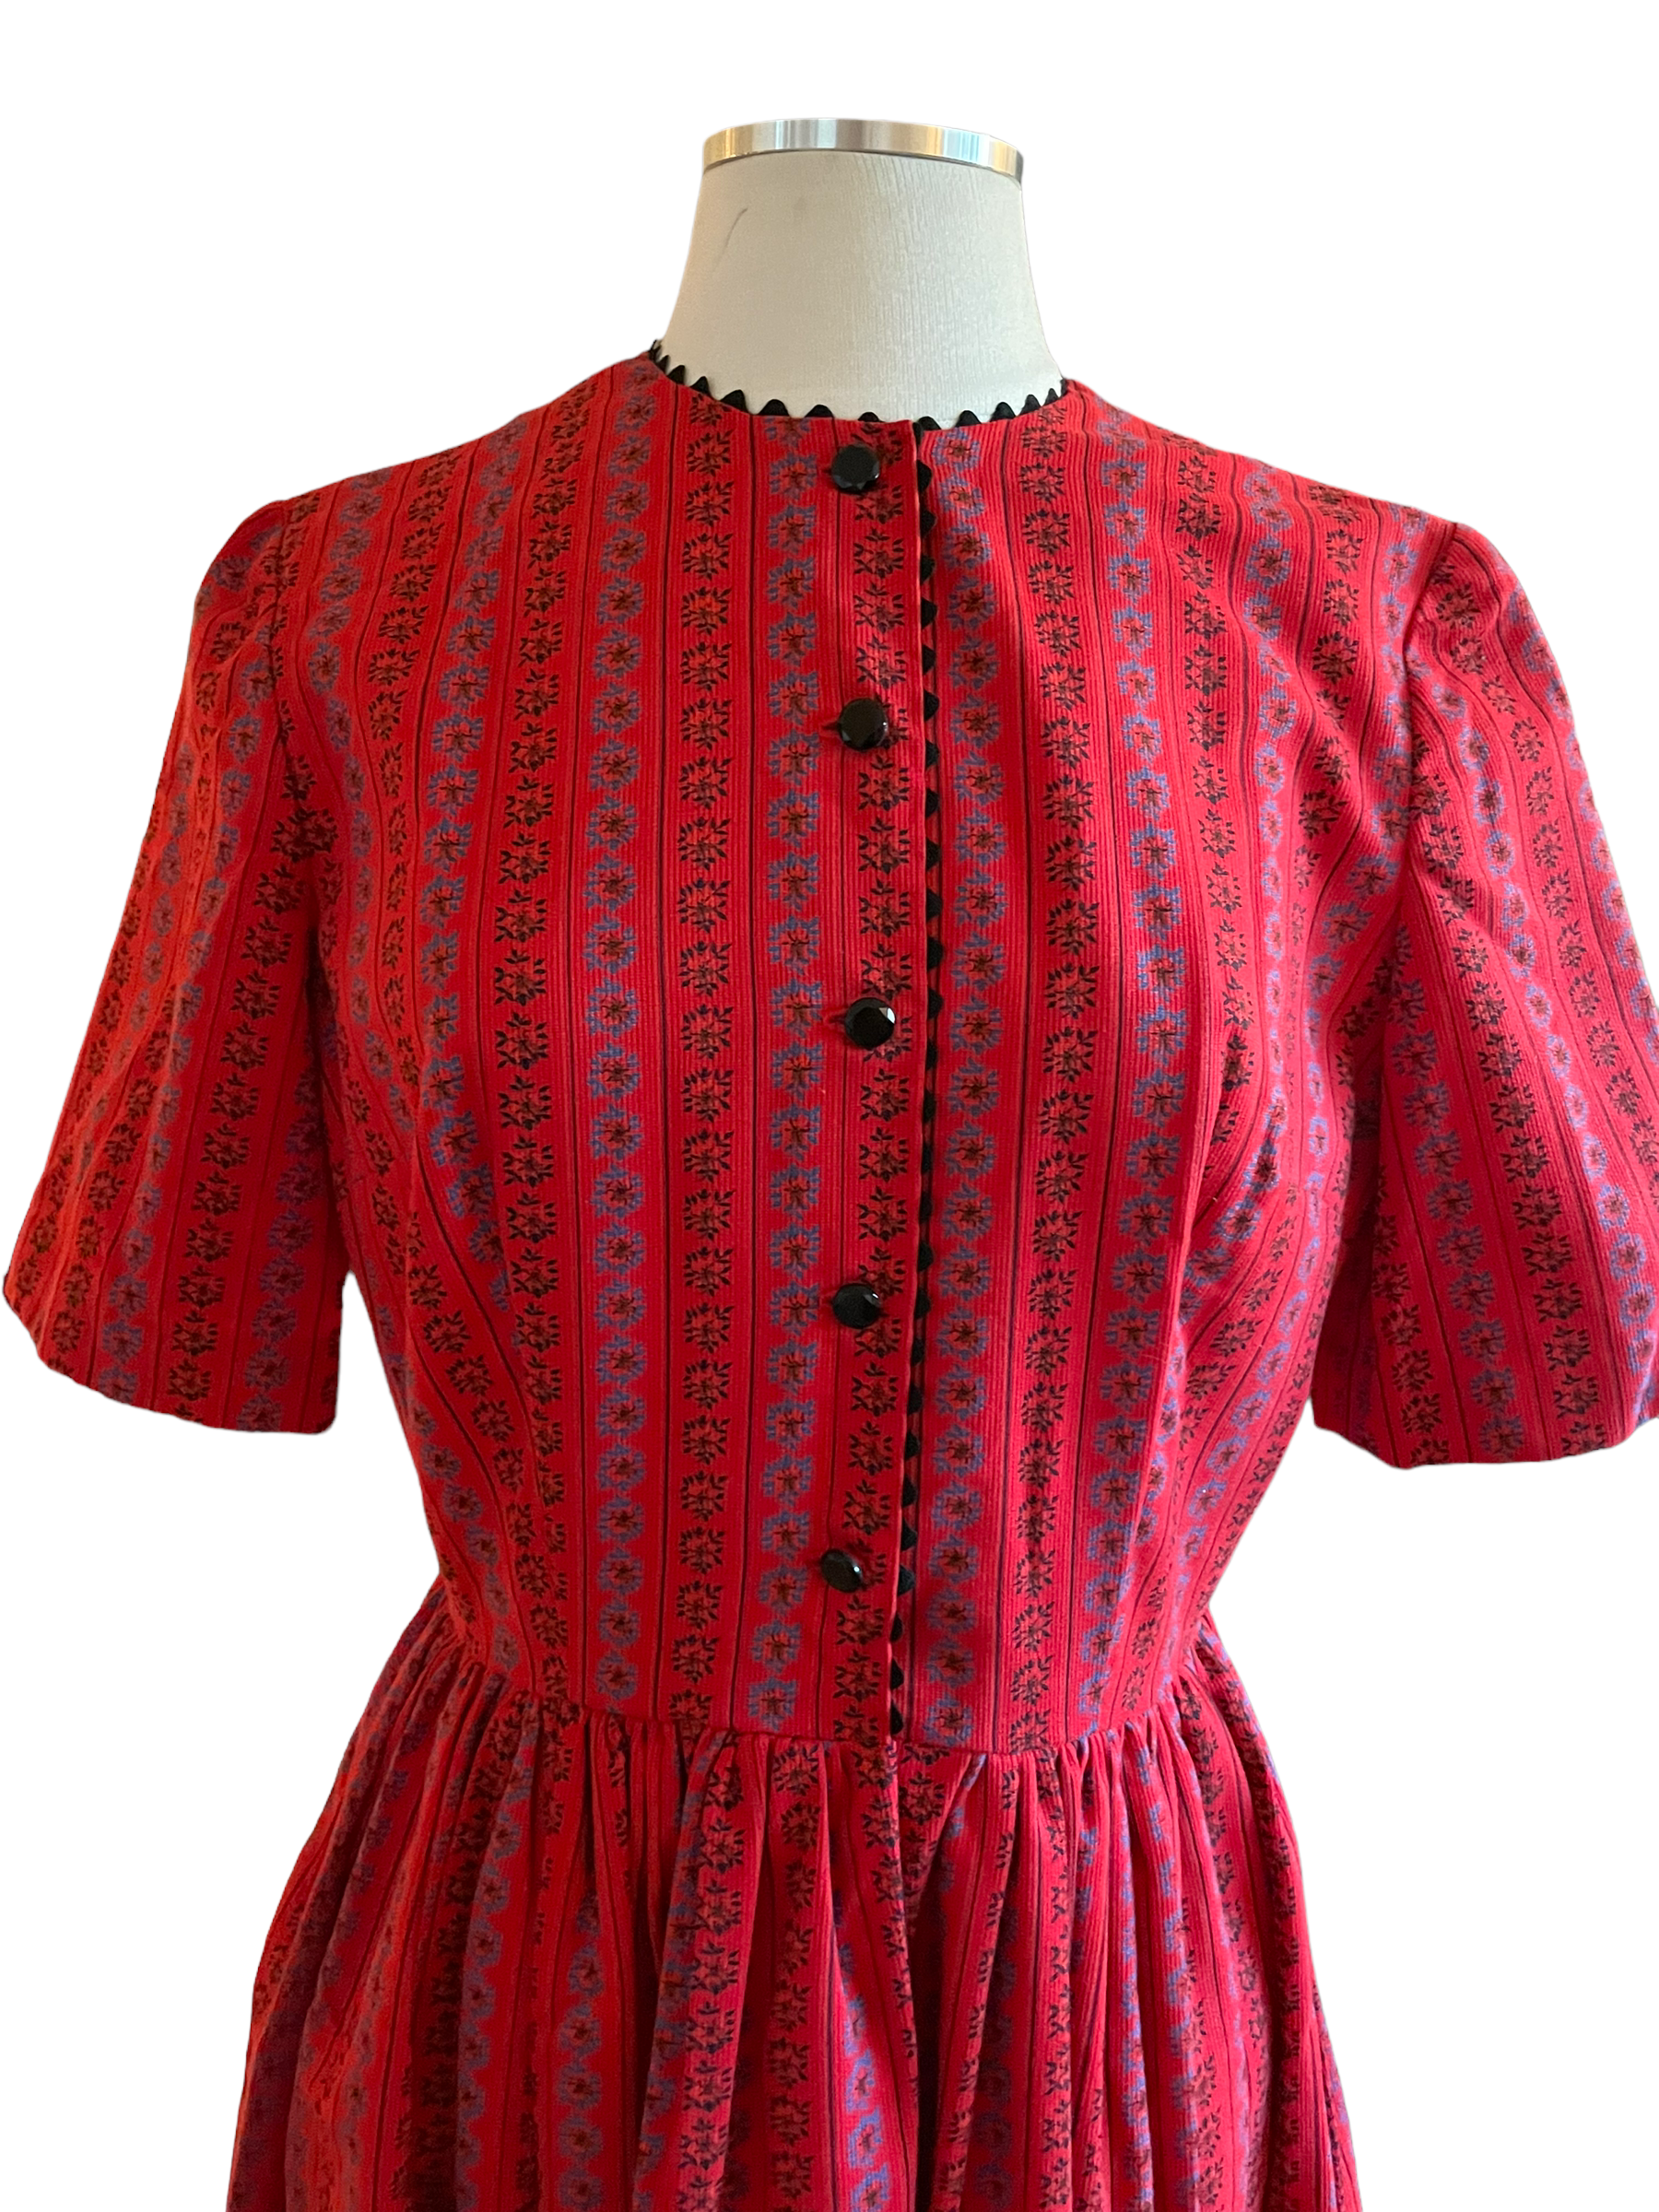 Vintage 1950s Red Corduroy Dress SZ S-M |  Barn Owl Vintage | Seattle Vintage Dresses Front upper view.